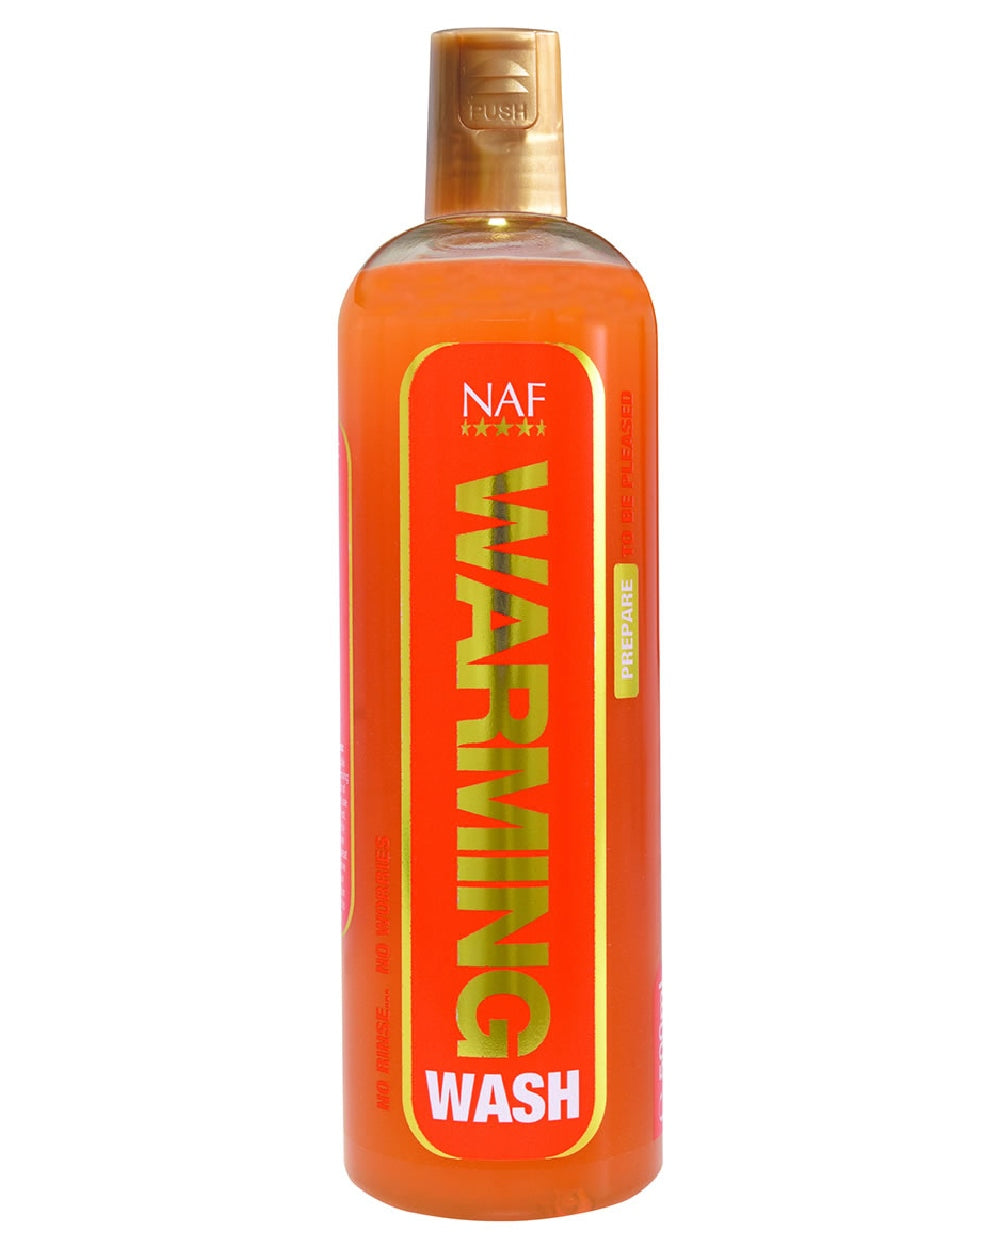 NAF Warming Wash 500ml on white background